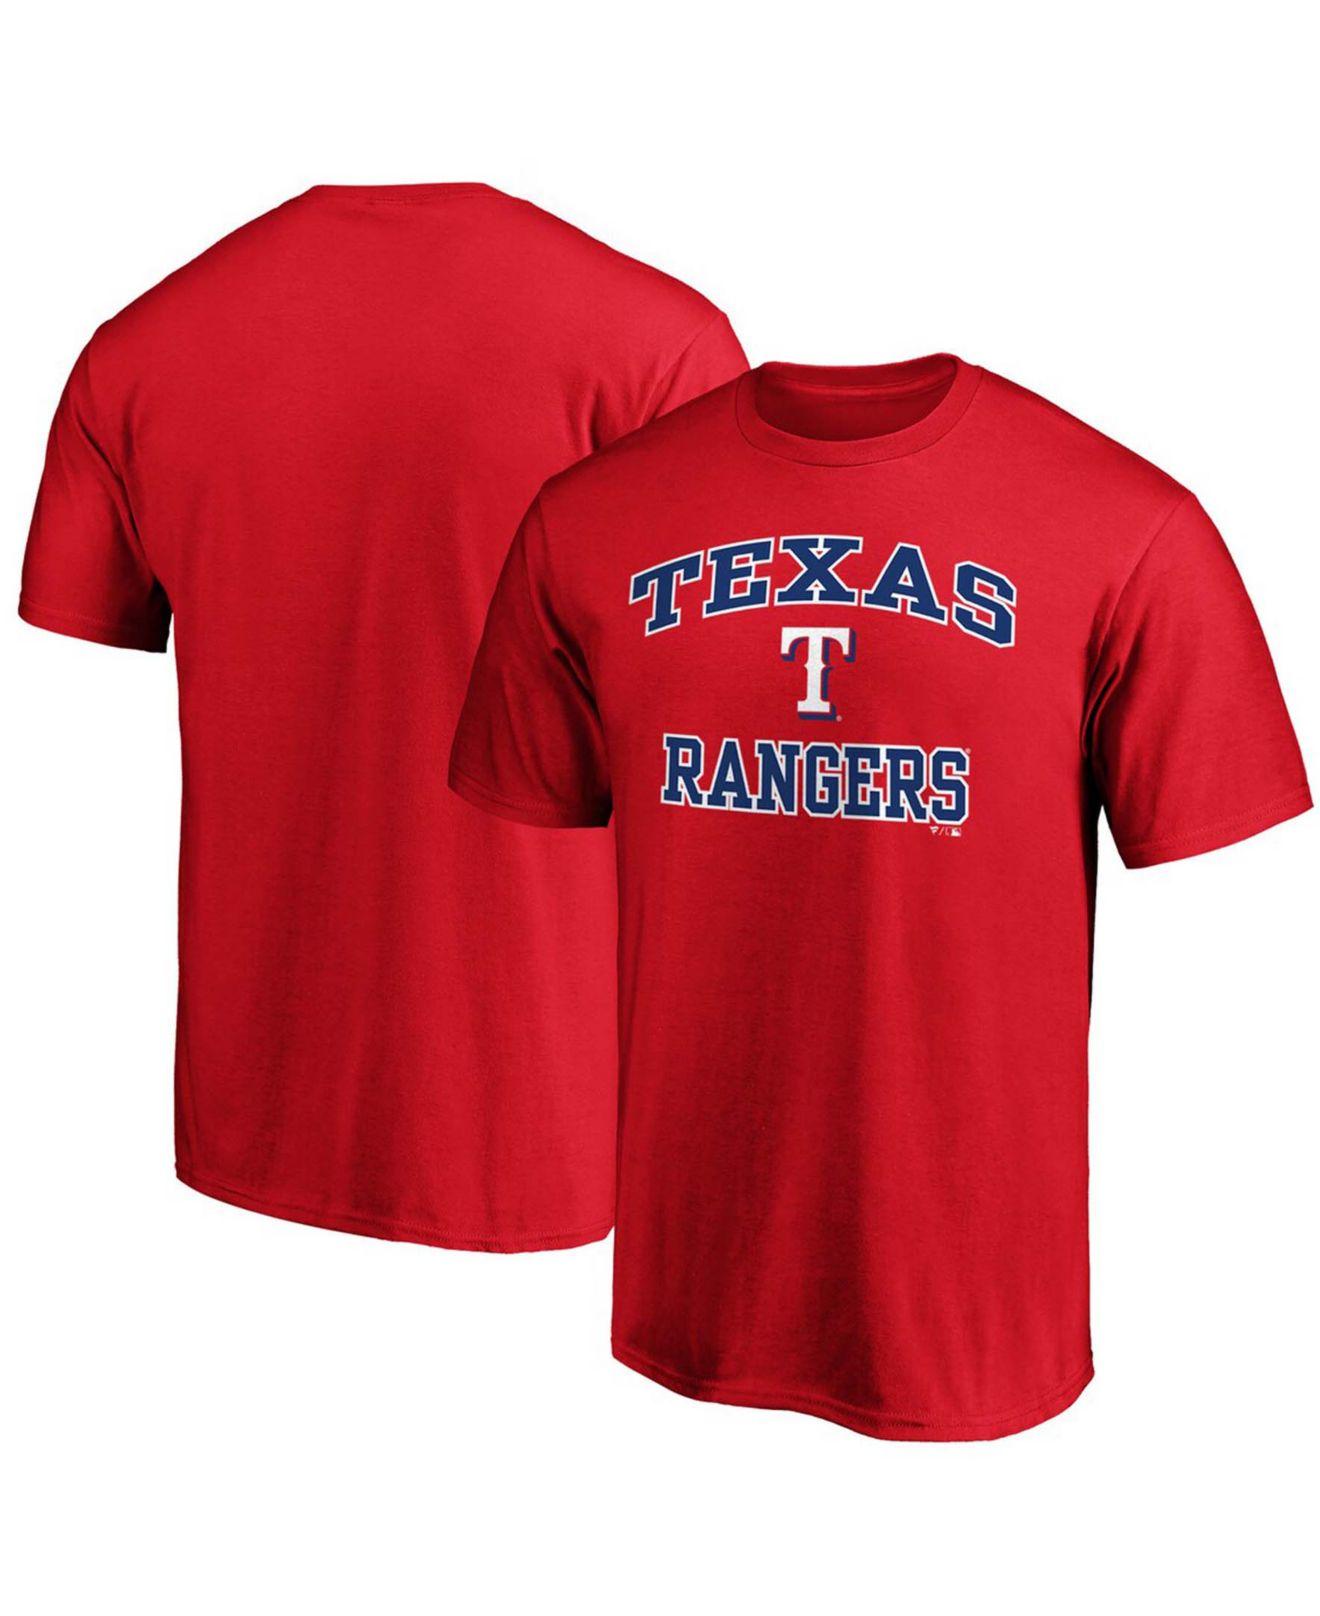 Men's Fanatics Branded Navy/Red Atlanta Braves T-Shirt Combo Pack